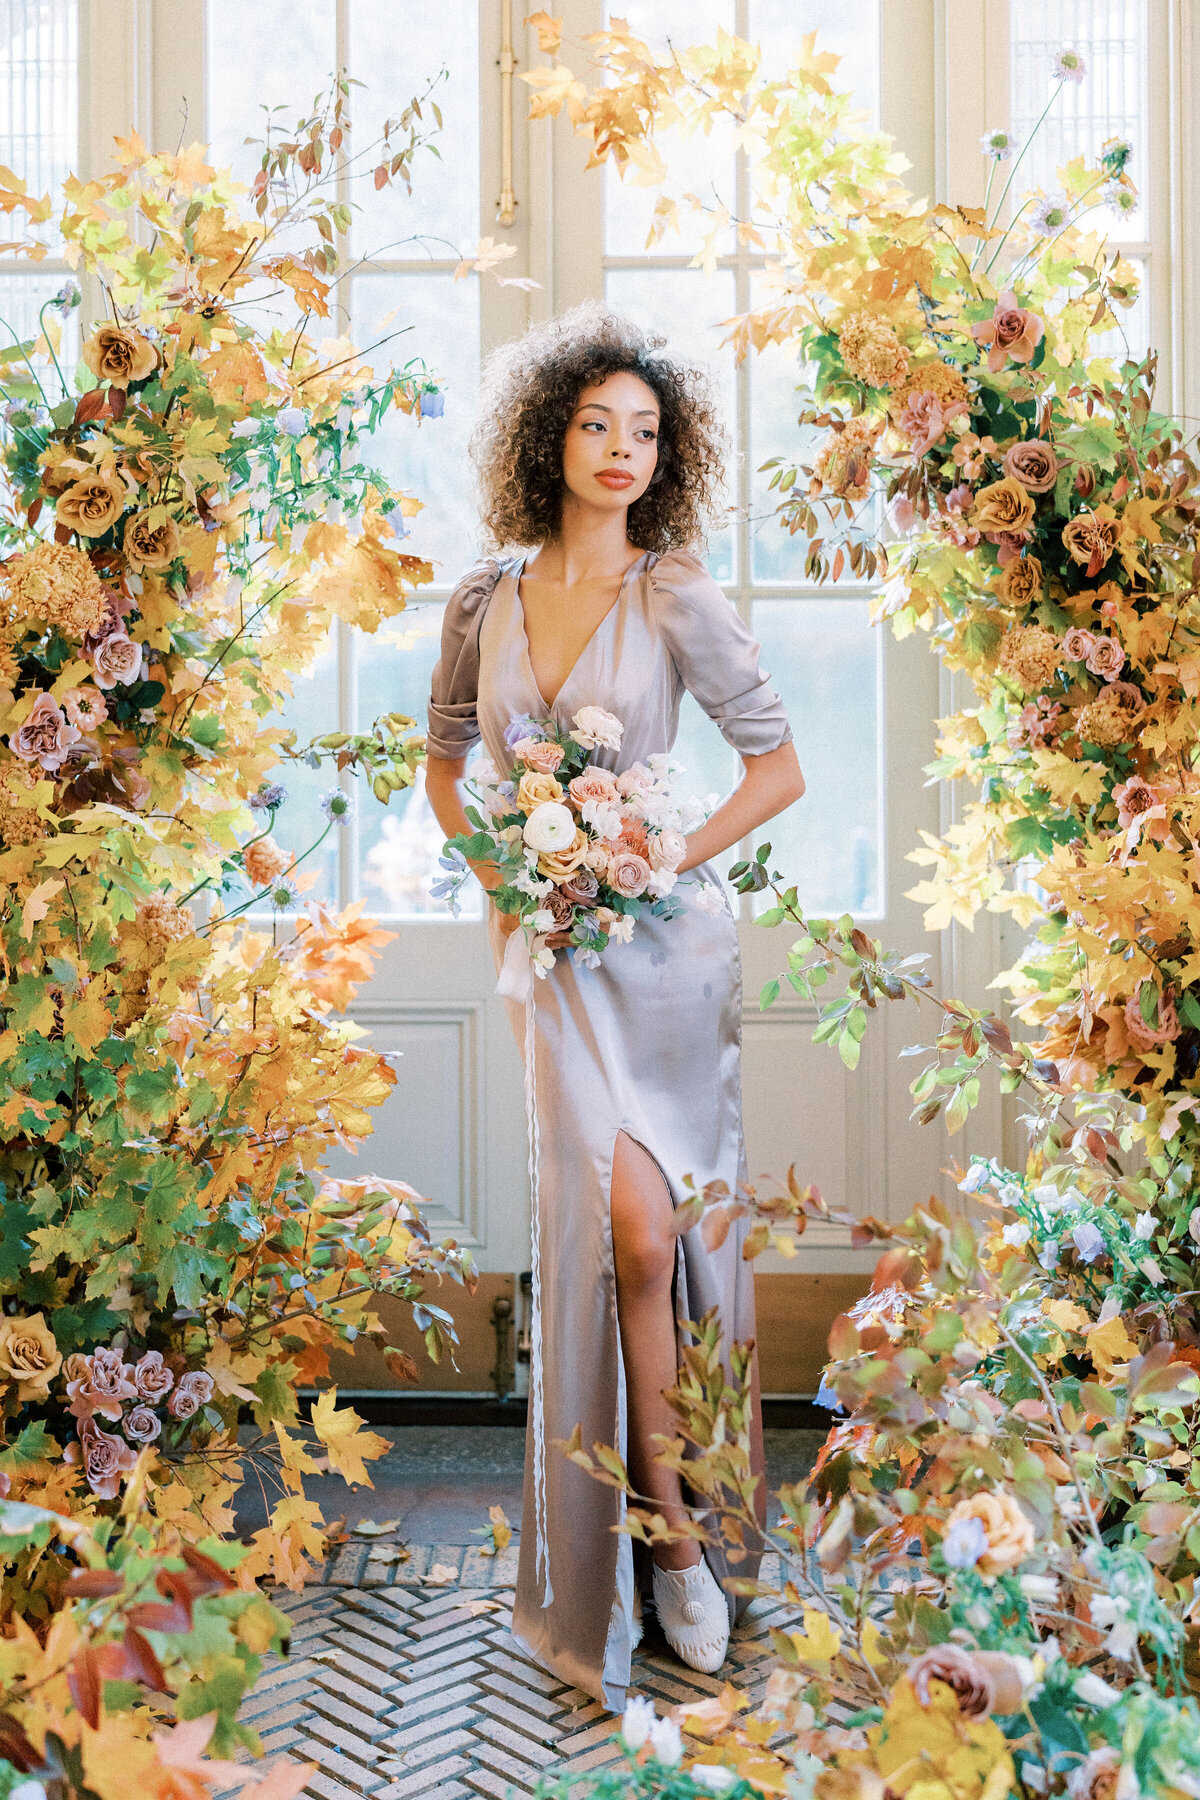 Sarah Rae Floral Designs Wedding Event Florist Flowers Kentucky Chic Whimsical Romantic Weddings5